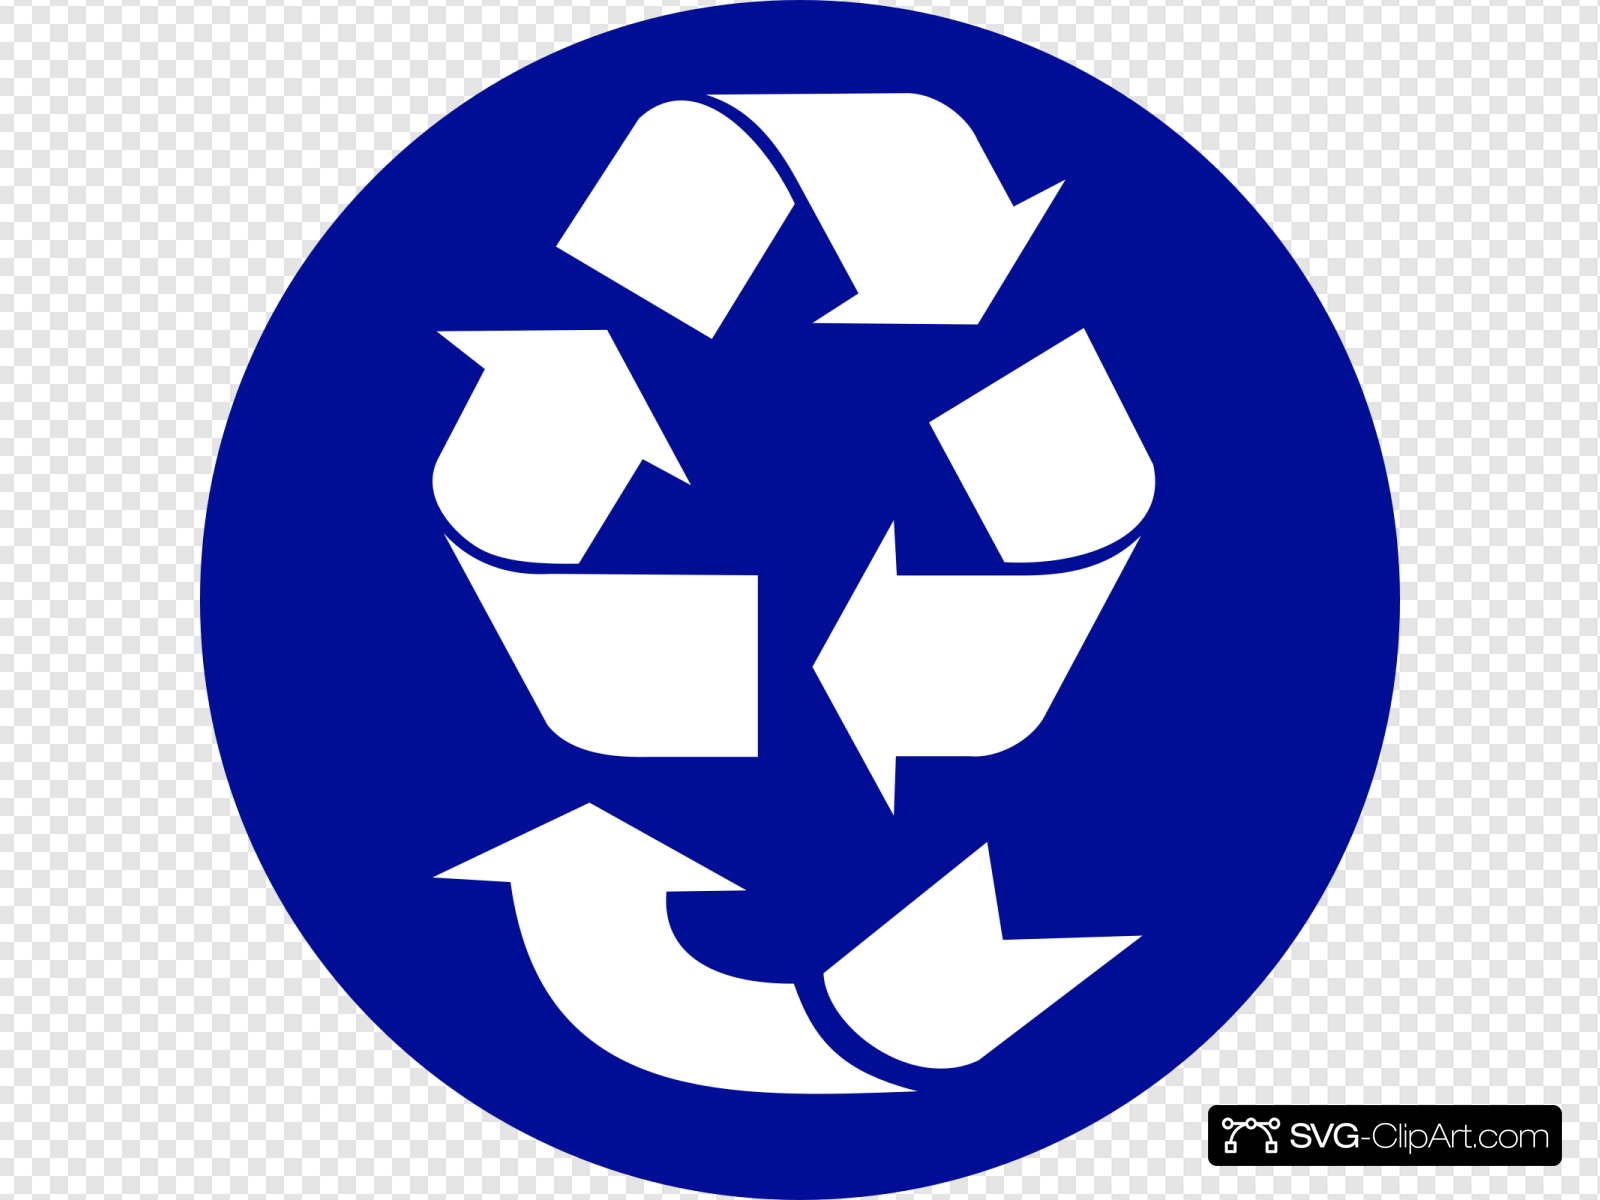 Recover Symbol Clip art, Icon and SVG.